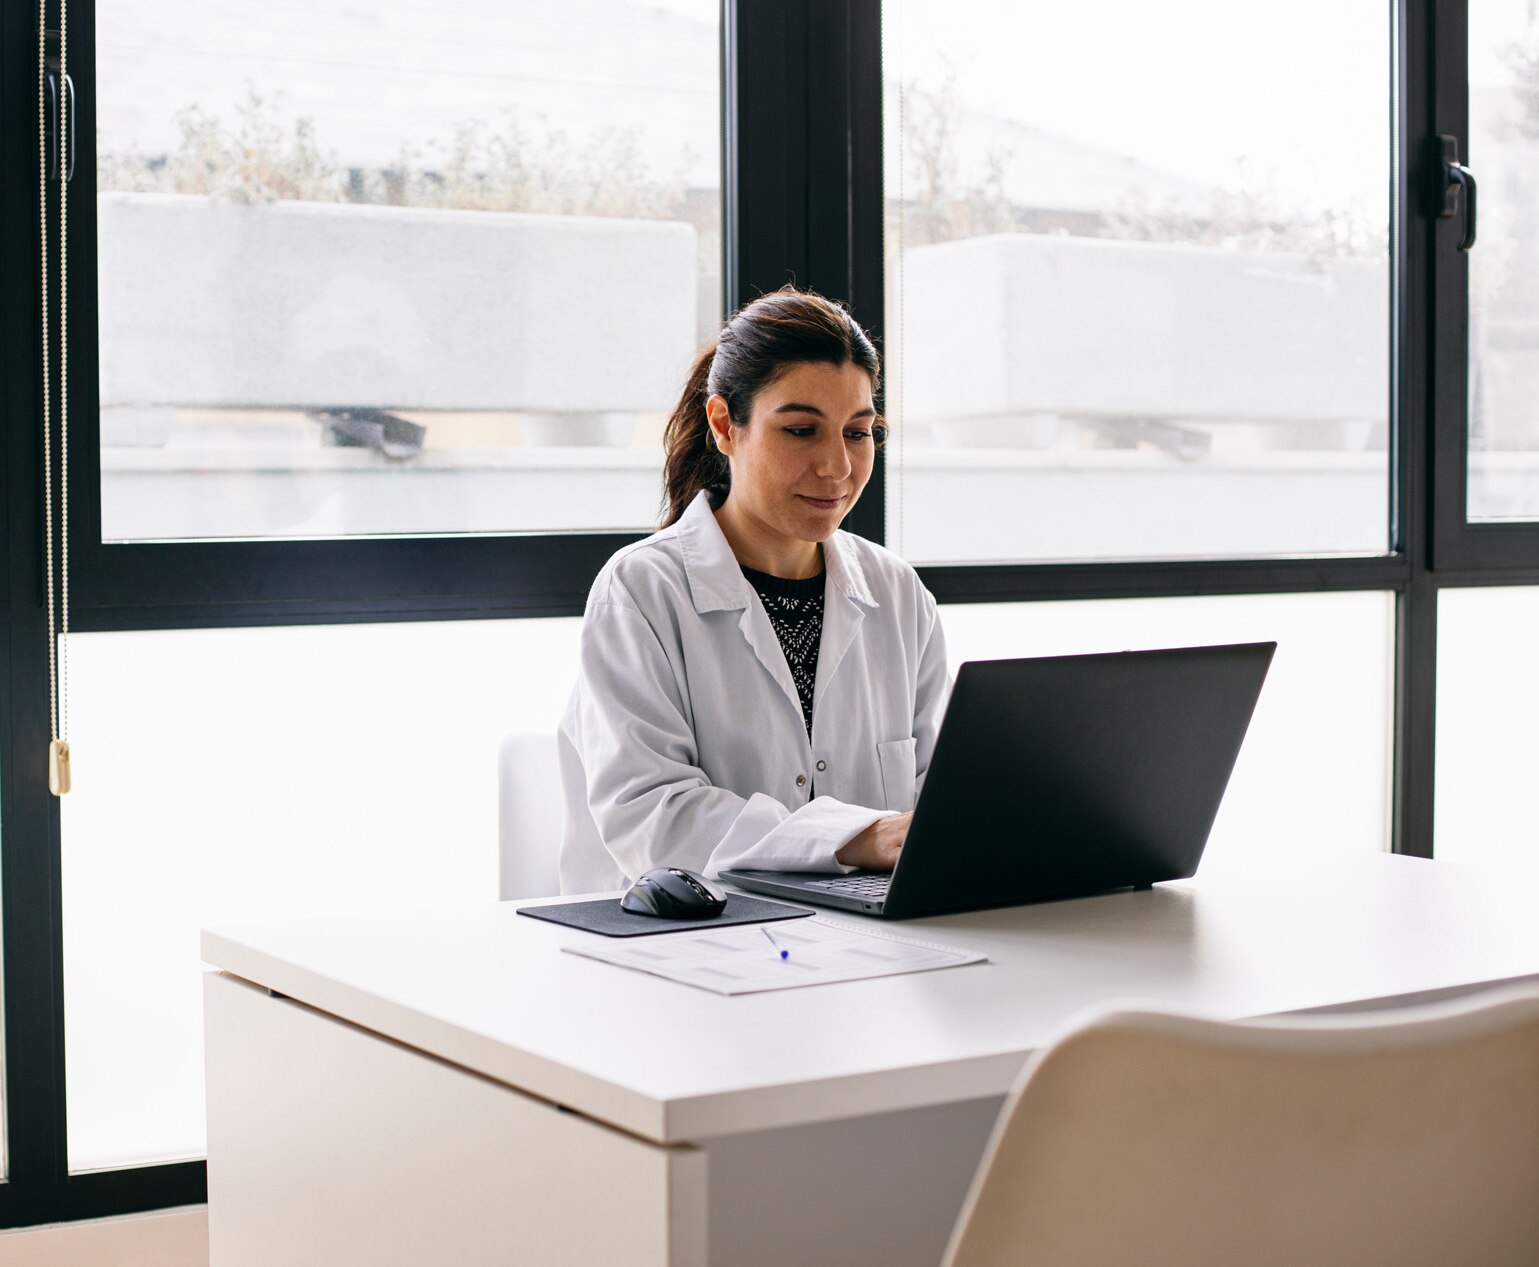 Doctor sitting at desk in medical practice using laptop